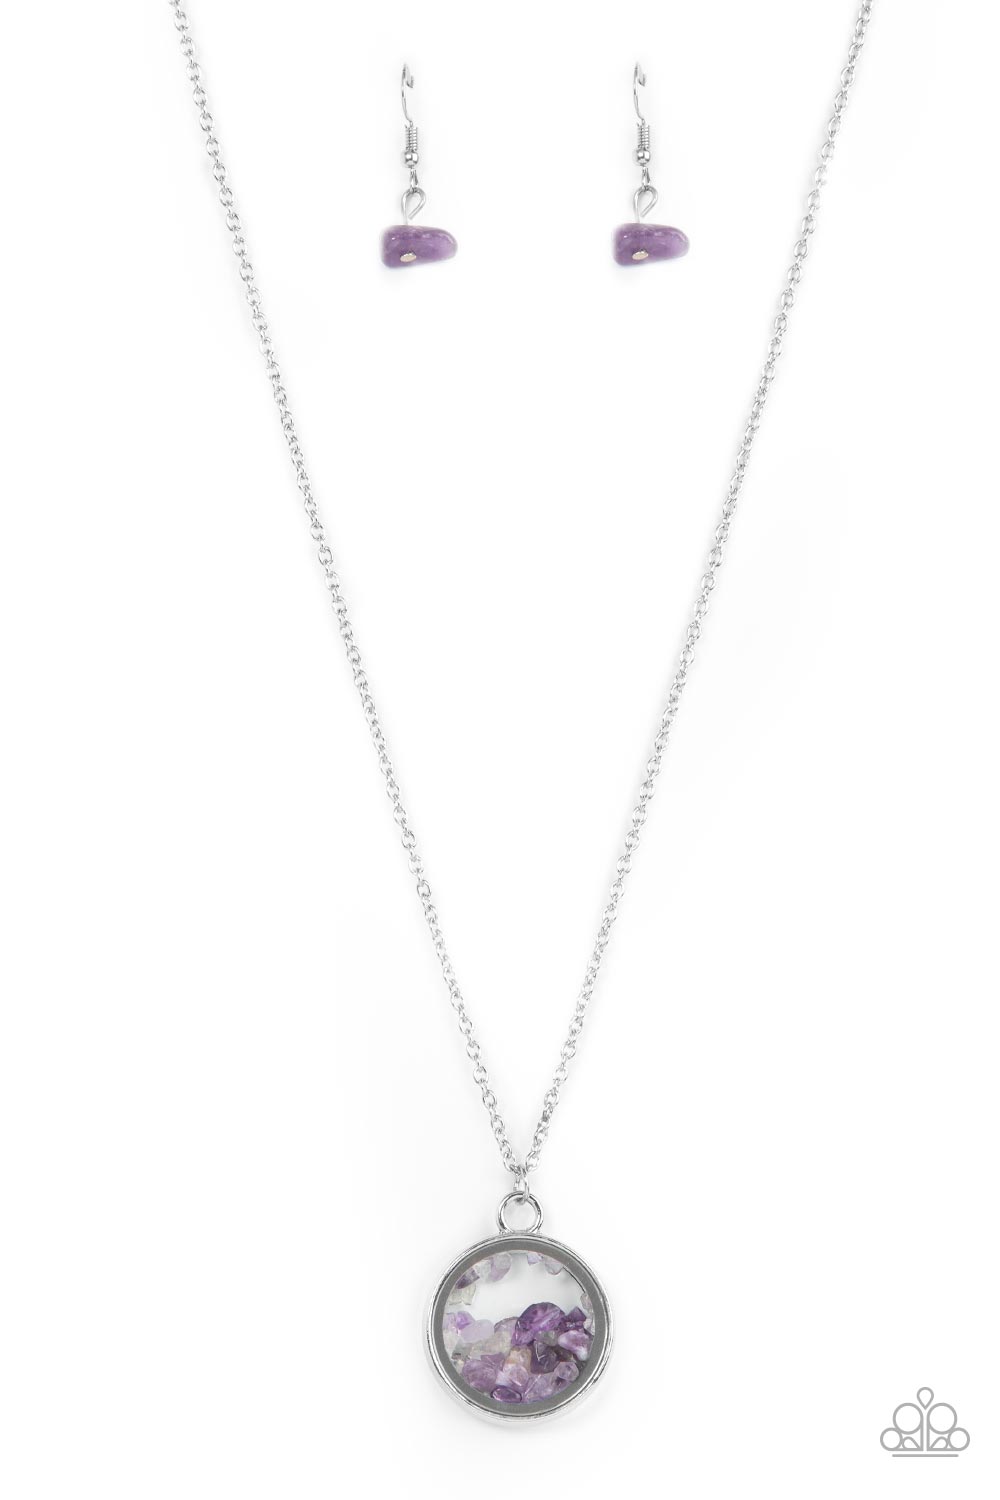 Gemstone Guru Paparazzi Accessories Necklace with Earrings Purple